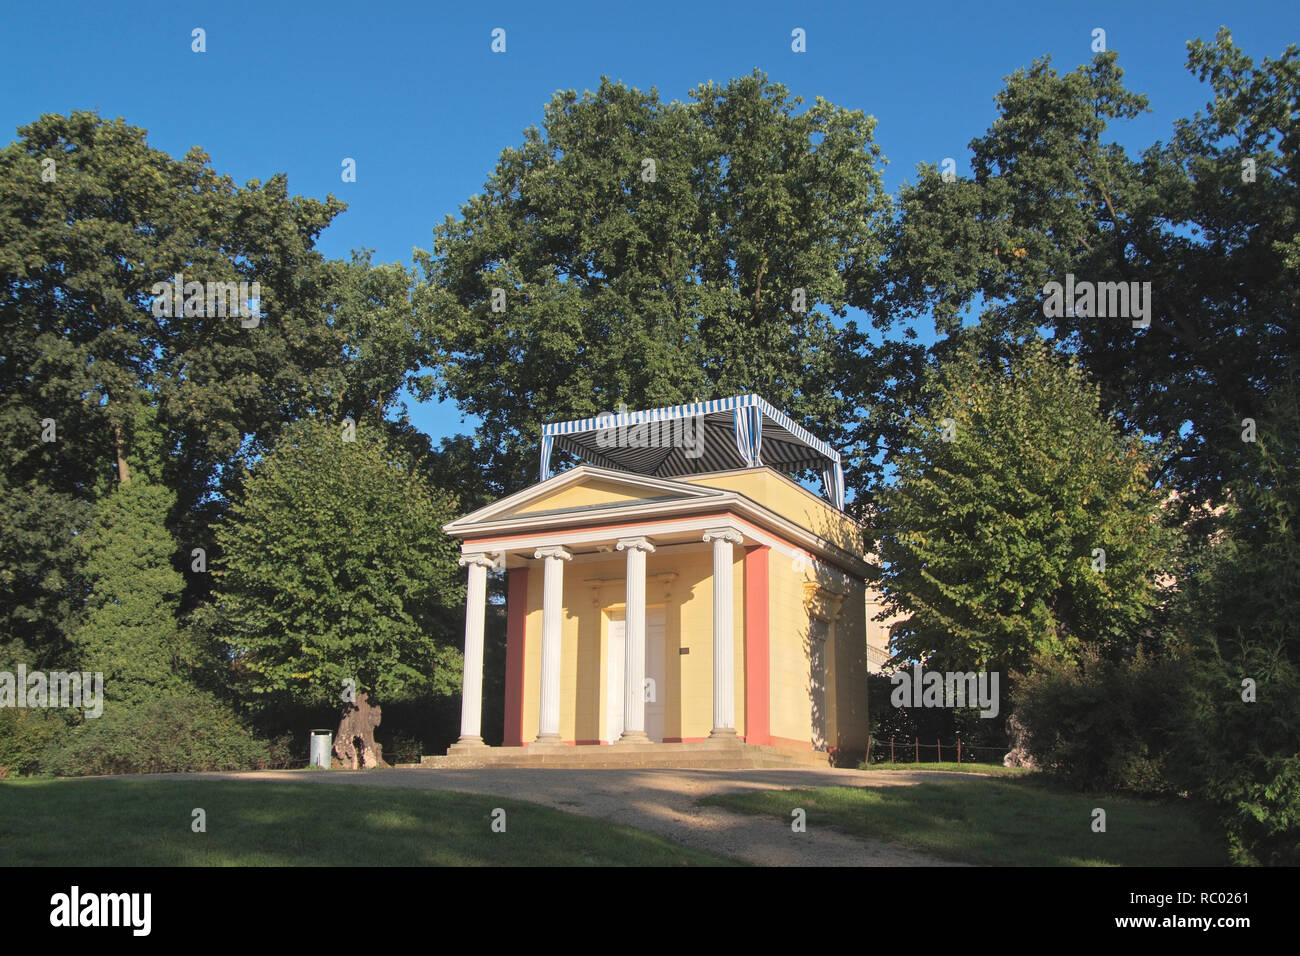 Pomonatempel auf dem Pfingstberg von Karl Friedrich Schinkel um 1800, Potsdam, Brandenburg, Deutschland, Europa |  Pomona Temple on the Pfingstberg, b Stock Photo